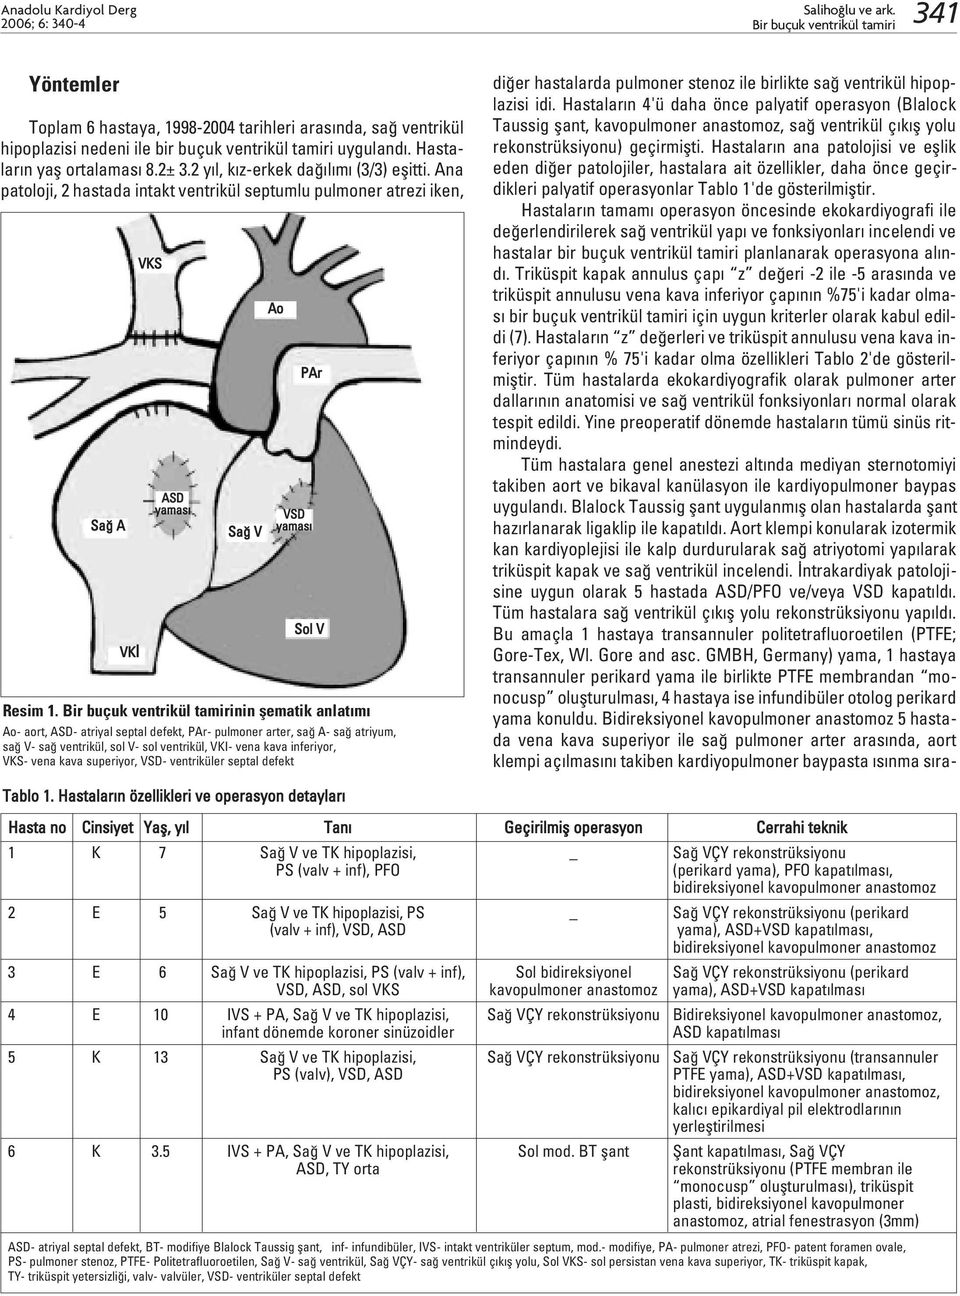 nin flematik anlat m Ao- aort, ASD- atriyal septal defekt, PAr- pulmoner arter, sa A- sa atriyum, sa V- sa ventrikül, sol V- sol ventrikül, VKI- vena kava inferiyor, VKS- vena kava superiyor, VSD-